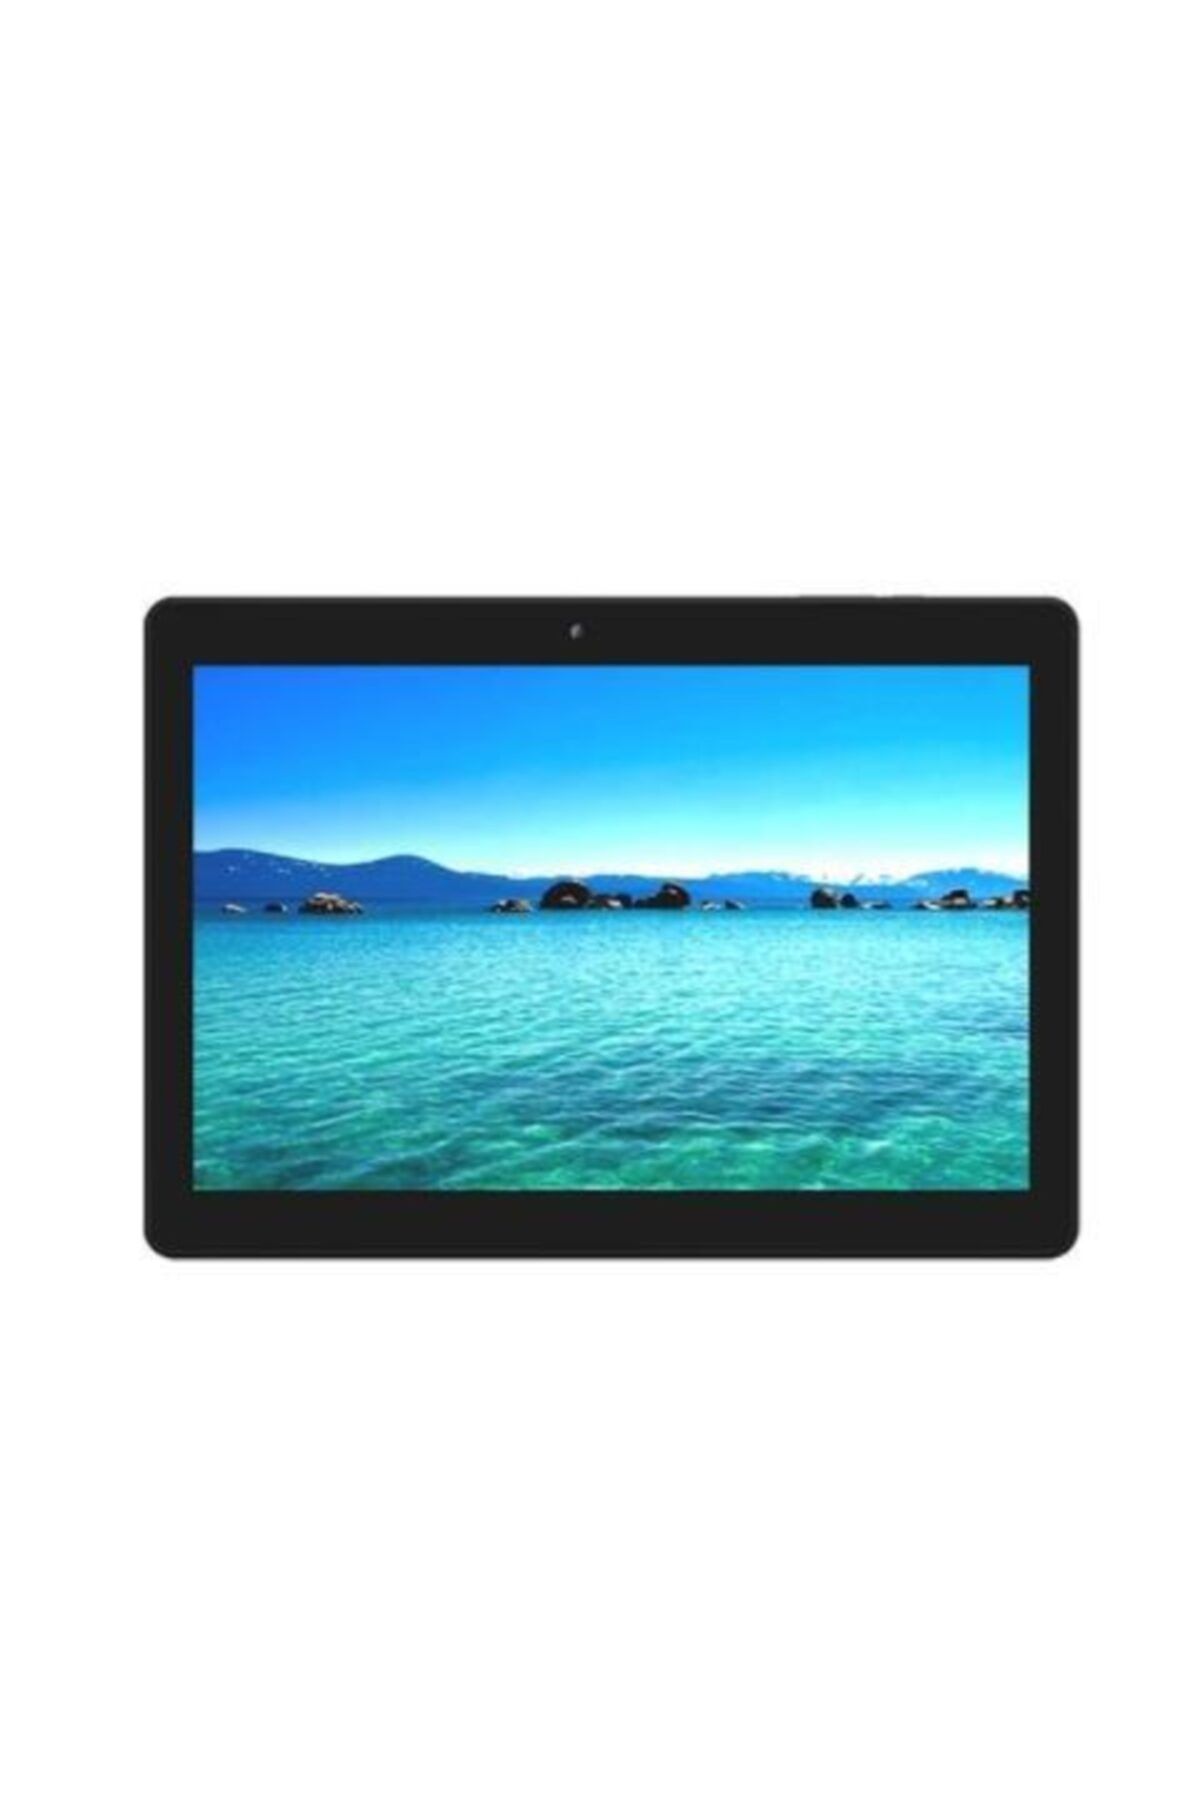 Everest Everpad Dc-1032 2gb 32gb Wıfı 10.1 Inc 800x1280 Ips Siyah Android Go Tablet